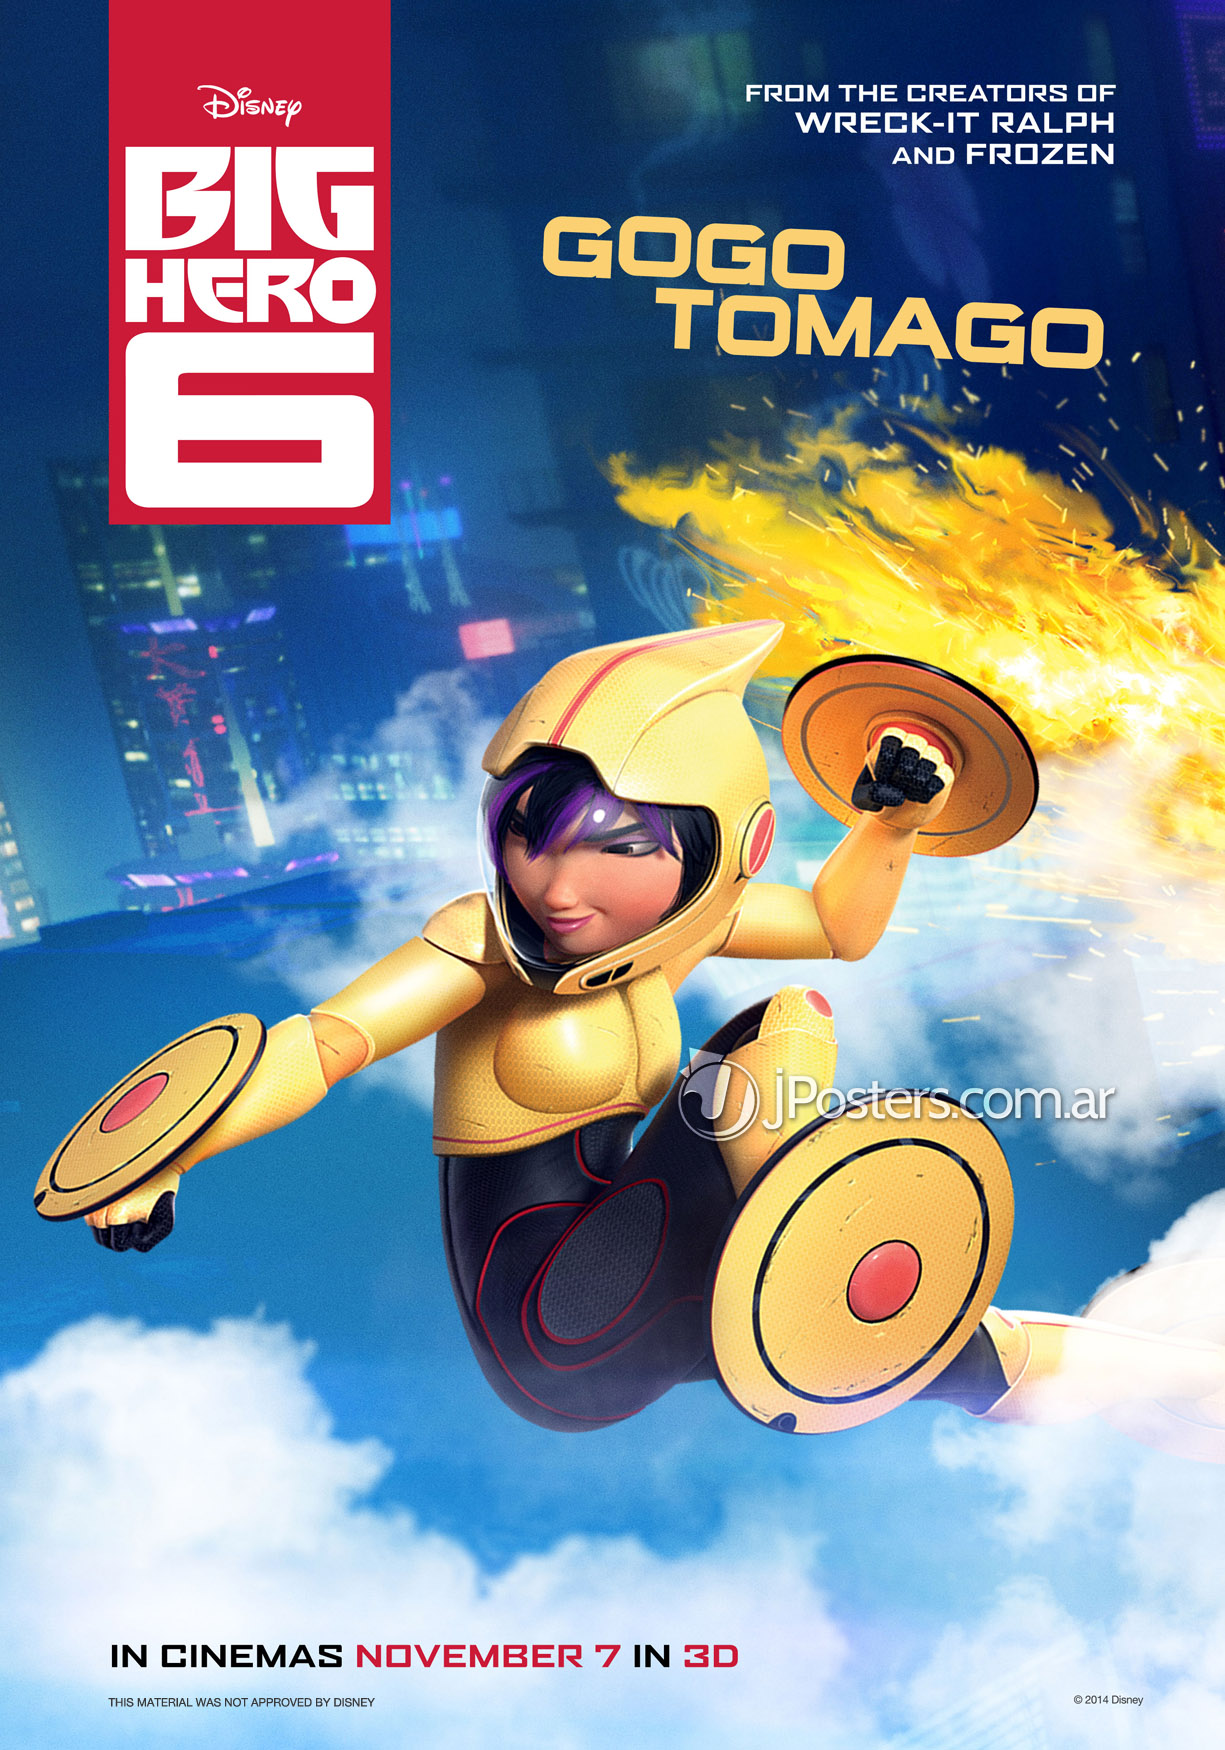 wpid-big-hero-6_character-poster_gogo-tomago-jpg.jpeg